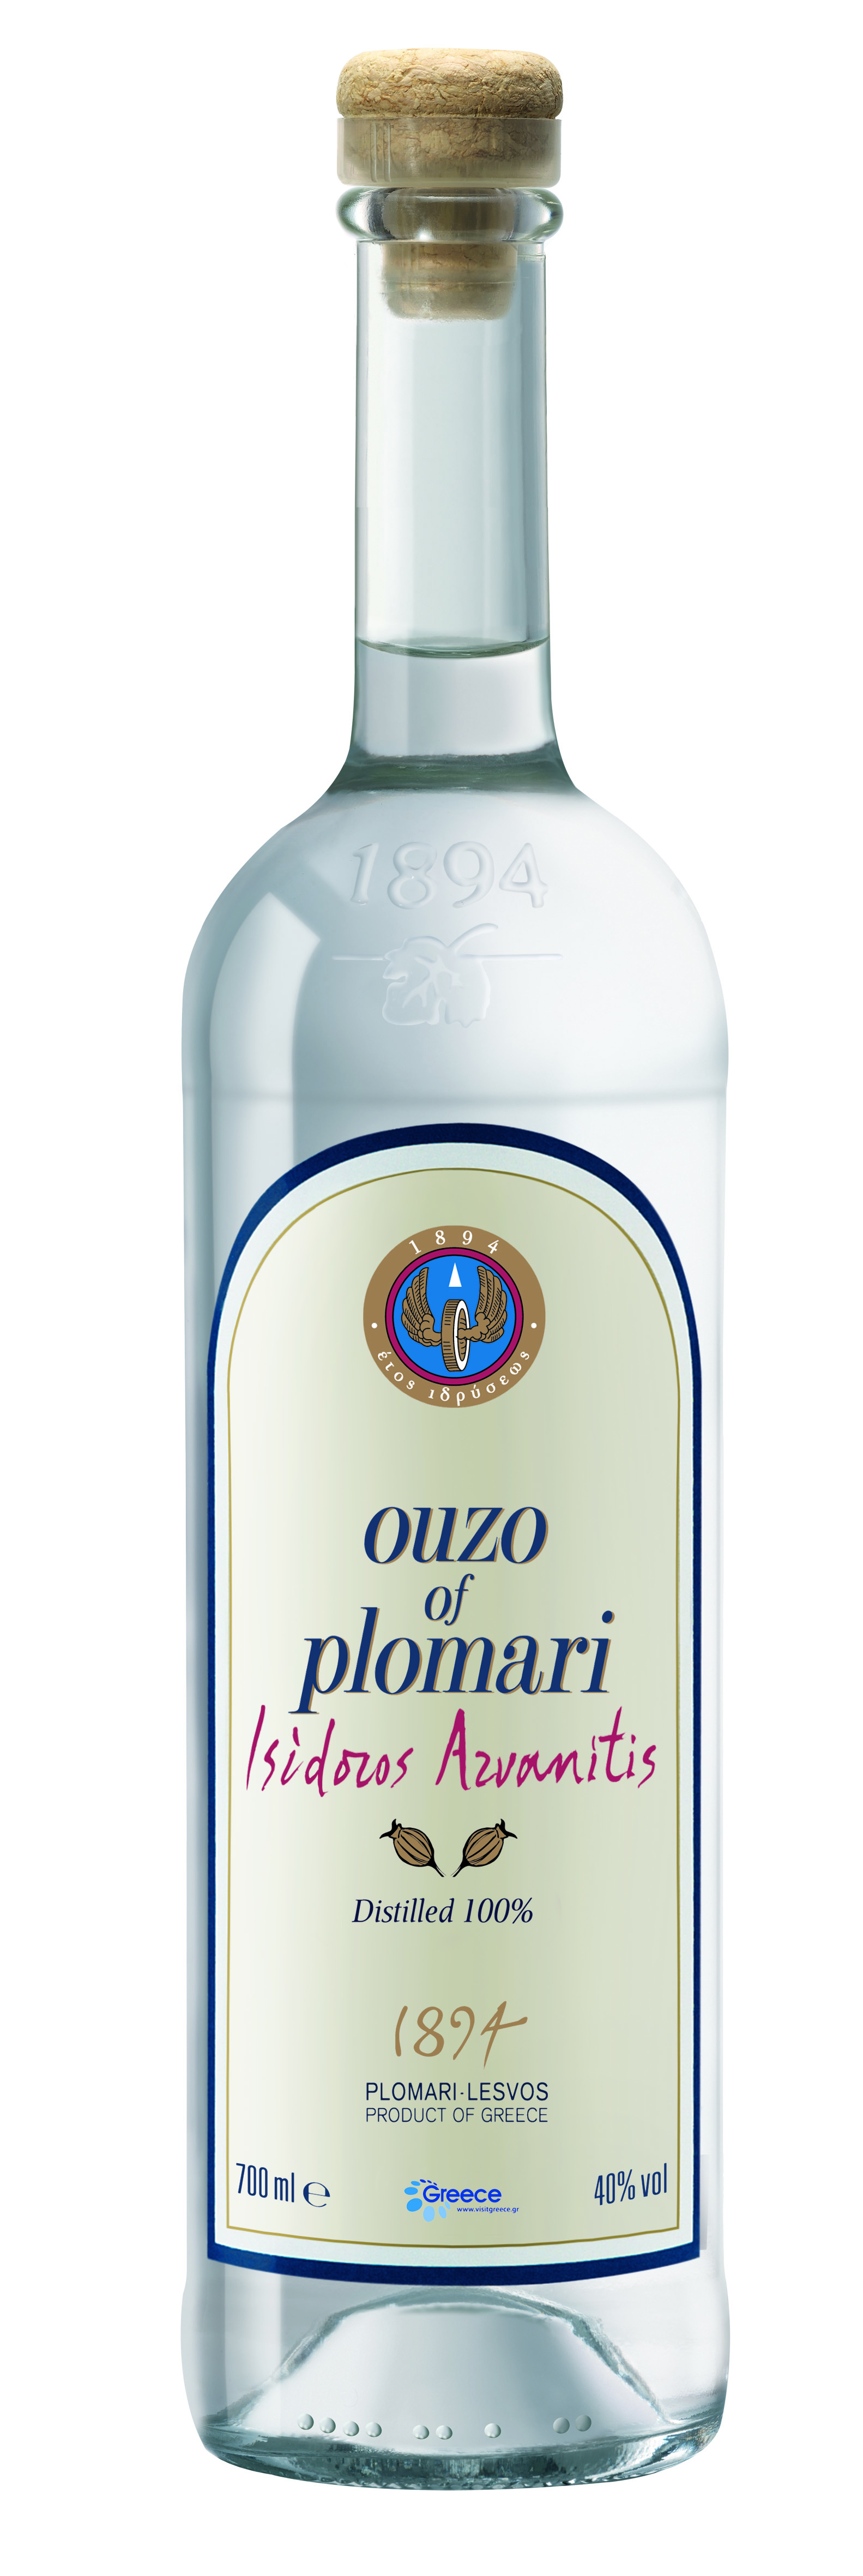 Ouzo Plomari Issidoros Arvanitis 40% 0.7L | Weinversand Shop-Kreta ~ Ouzo,  Metaxa, Weine, Olivenöl